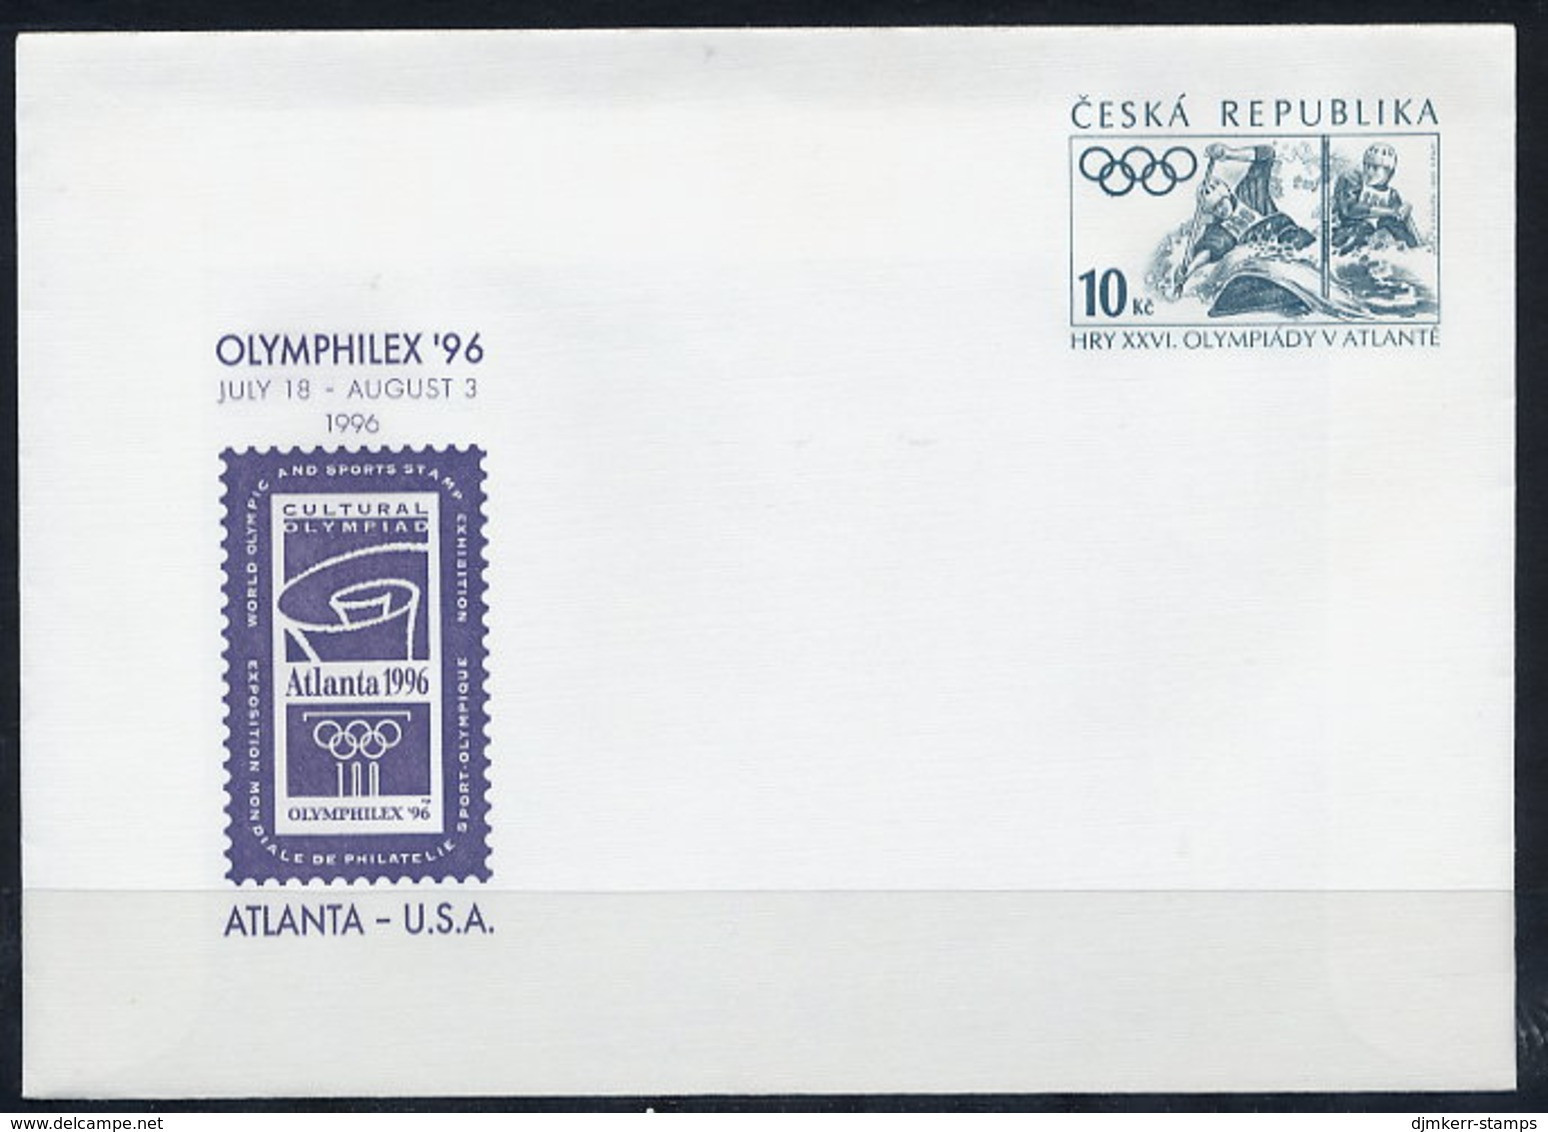 CZECH REPUBLIC 1996 10 Kc Envelope OLYMPHILEX '96 Unused.  Michel U3 - Briefe